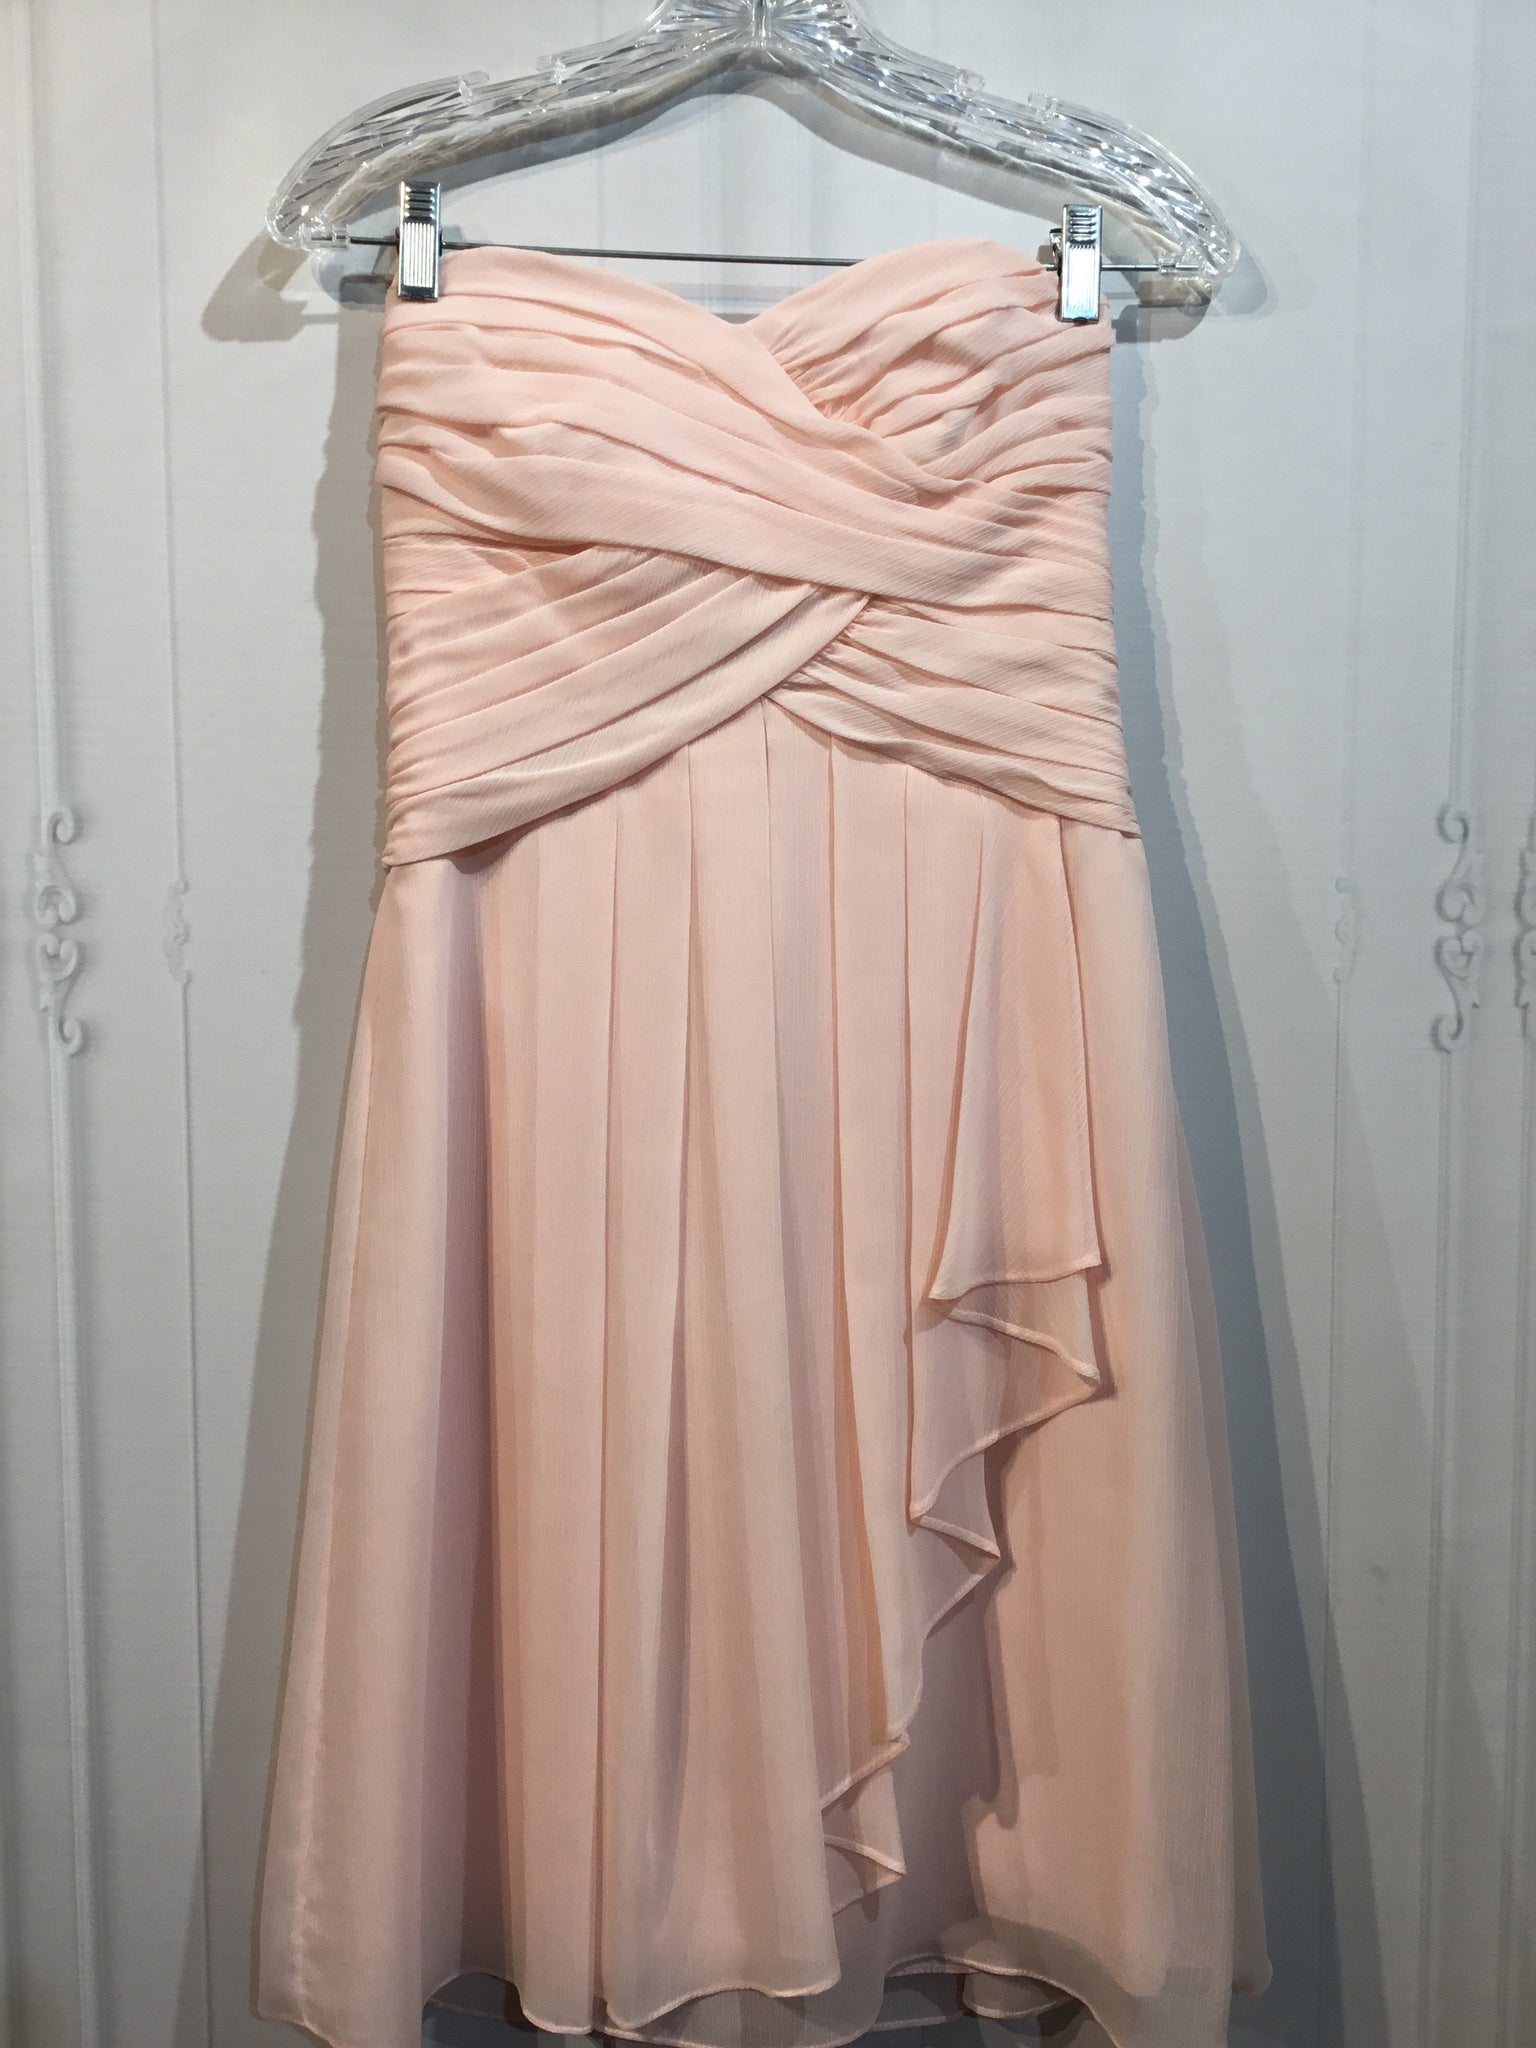 David's Bridal Size XS/0-2 Baby Pink Dress